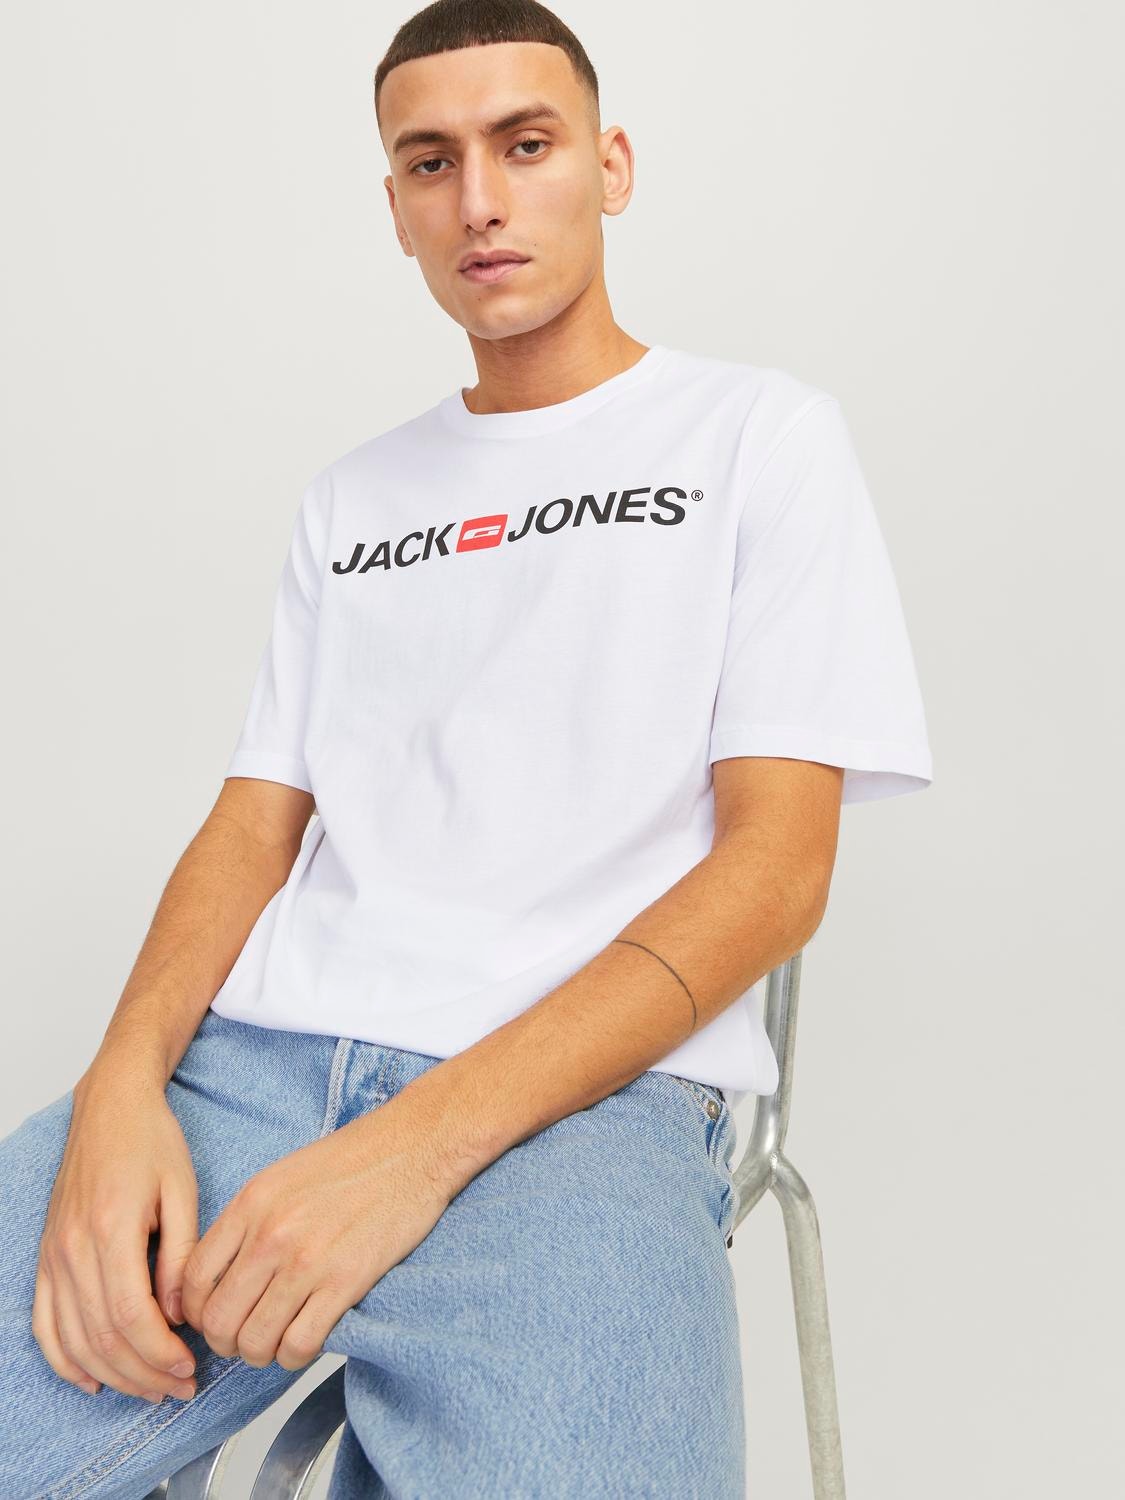 Jack & Jones Originals script logo t-shirt in white